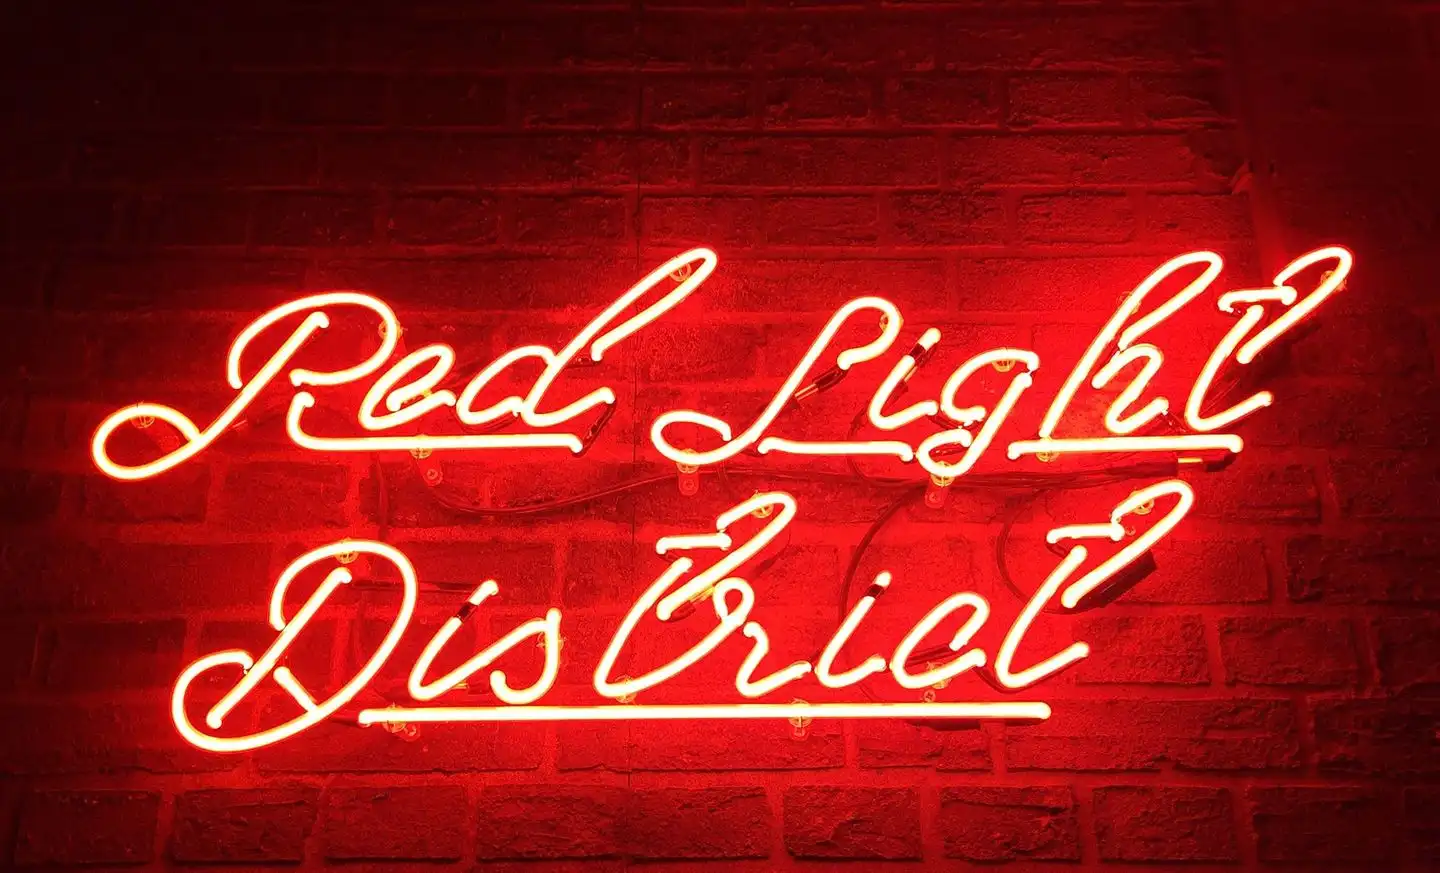 Red Light District Tour - Auba297